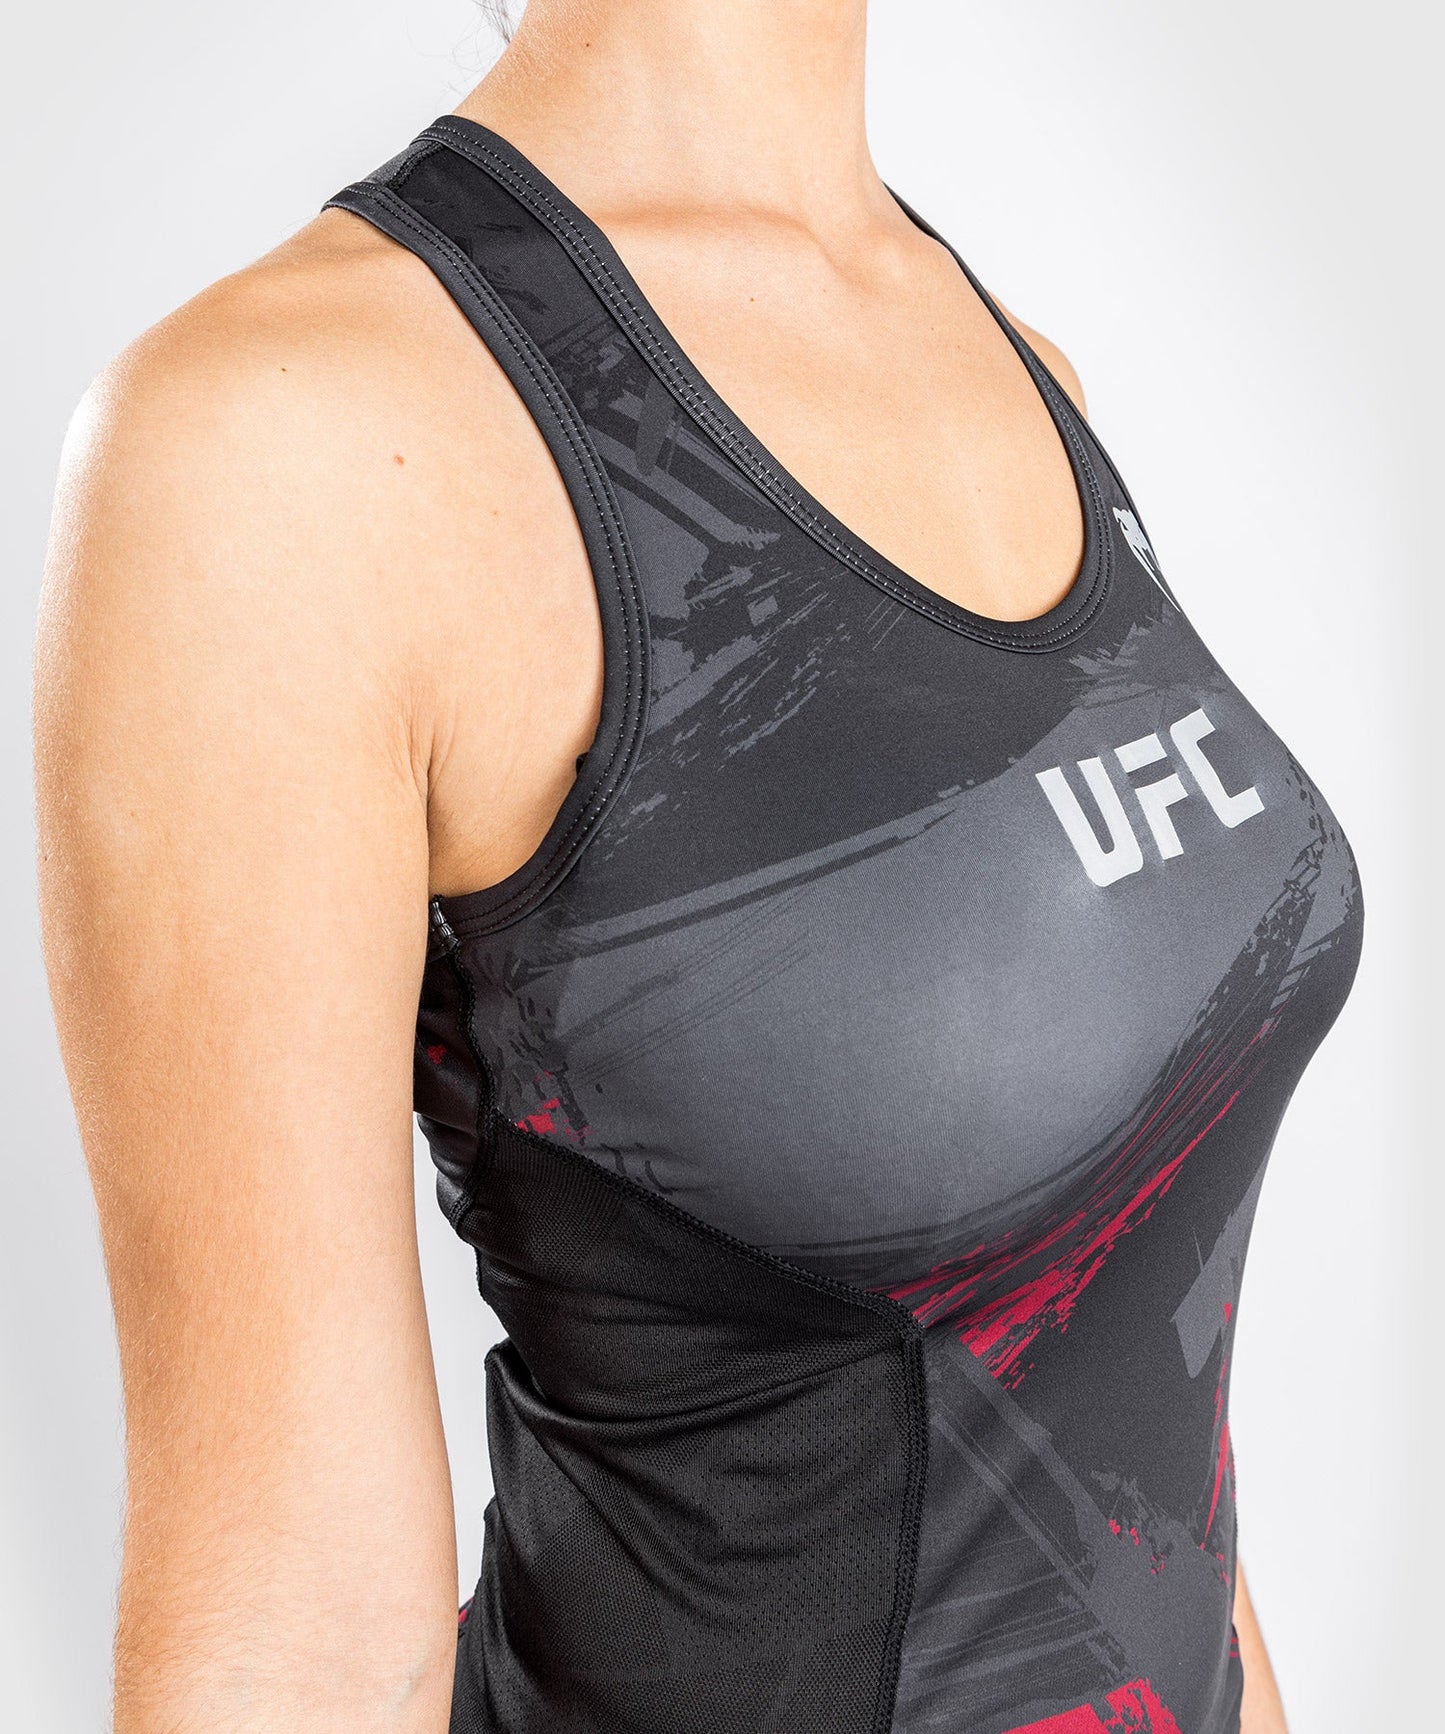 UFC Venum Authentic Fight Week Women’s 2.0 Performance Tank Top - Black/Red